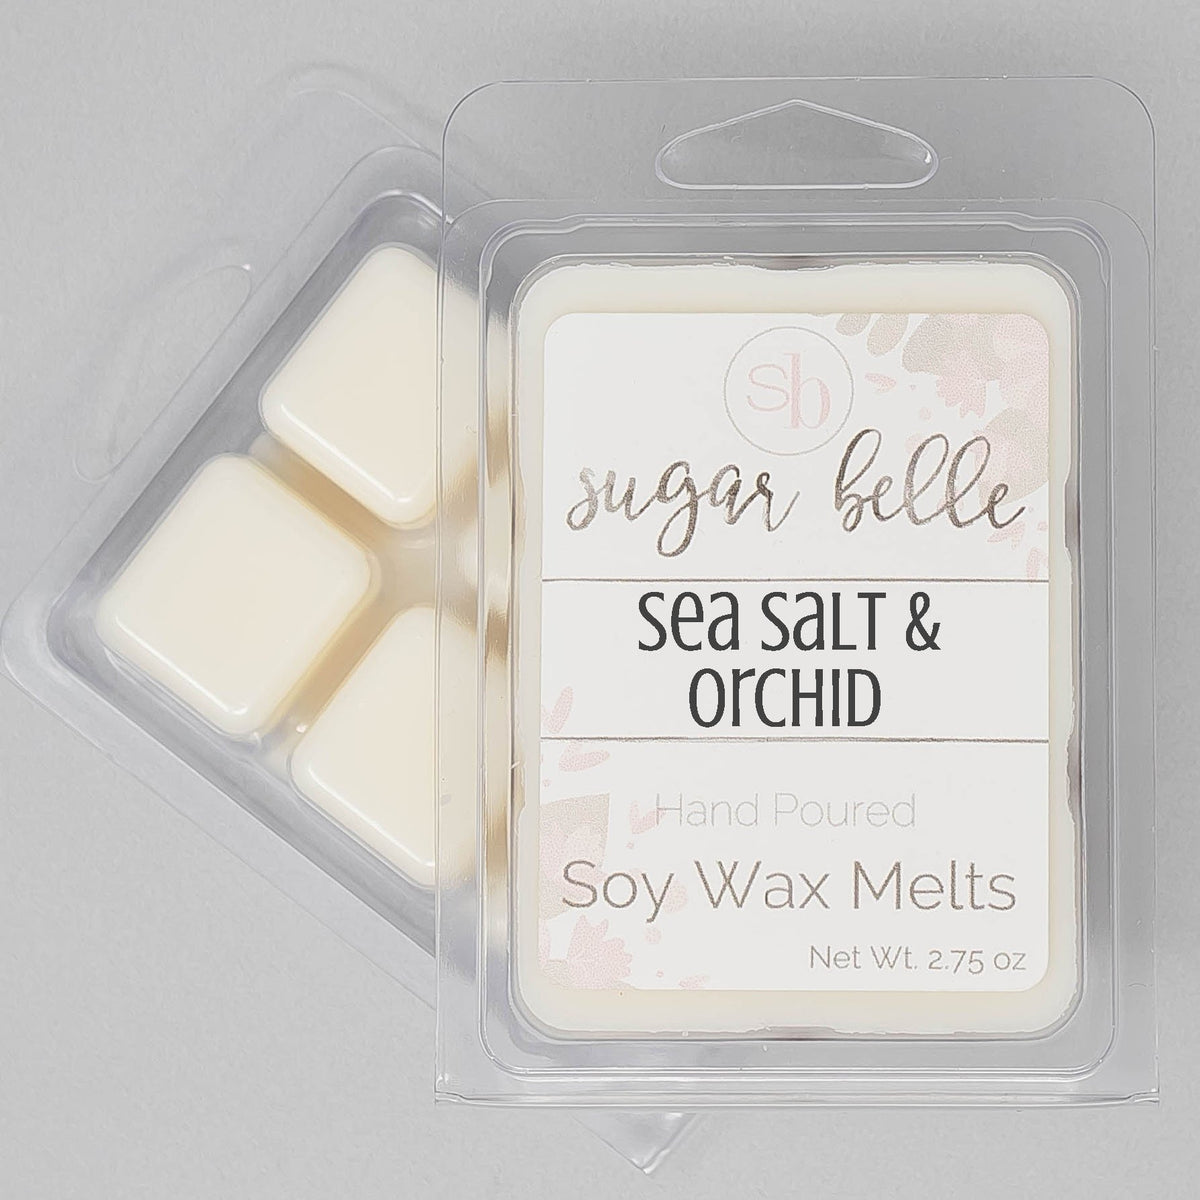 Sea Salt + Orchid | Coconut Wax Melt